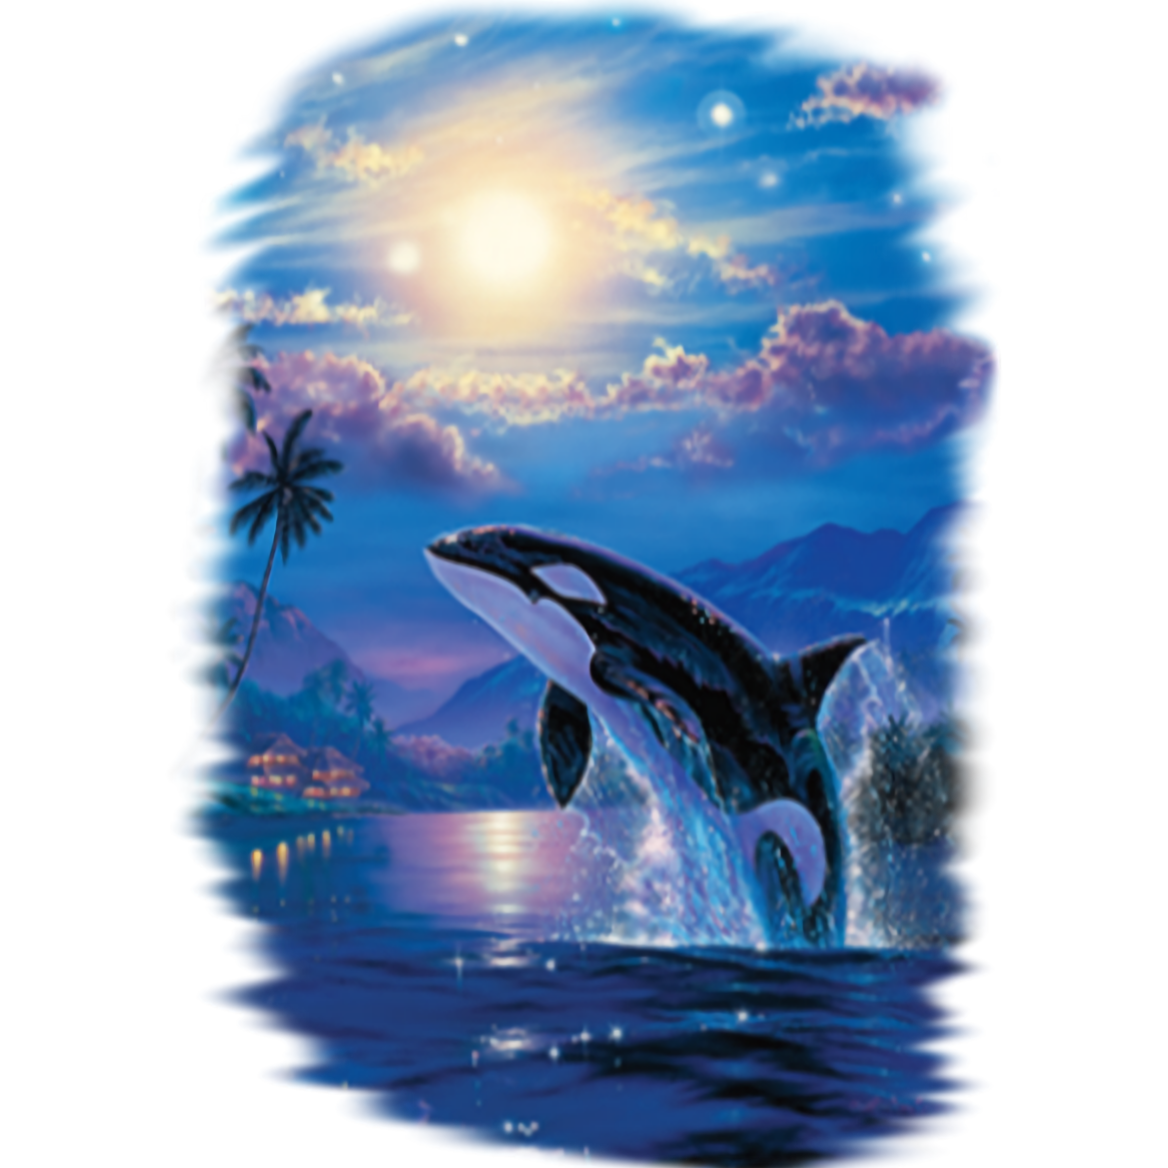 Orca (Moonrise - Joyful Time - Killer Whale)